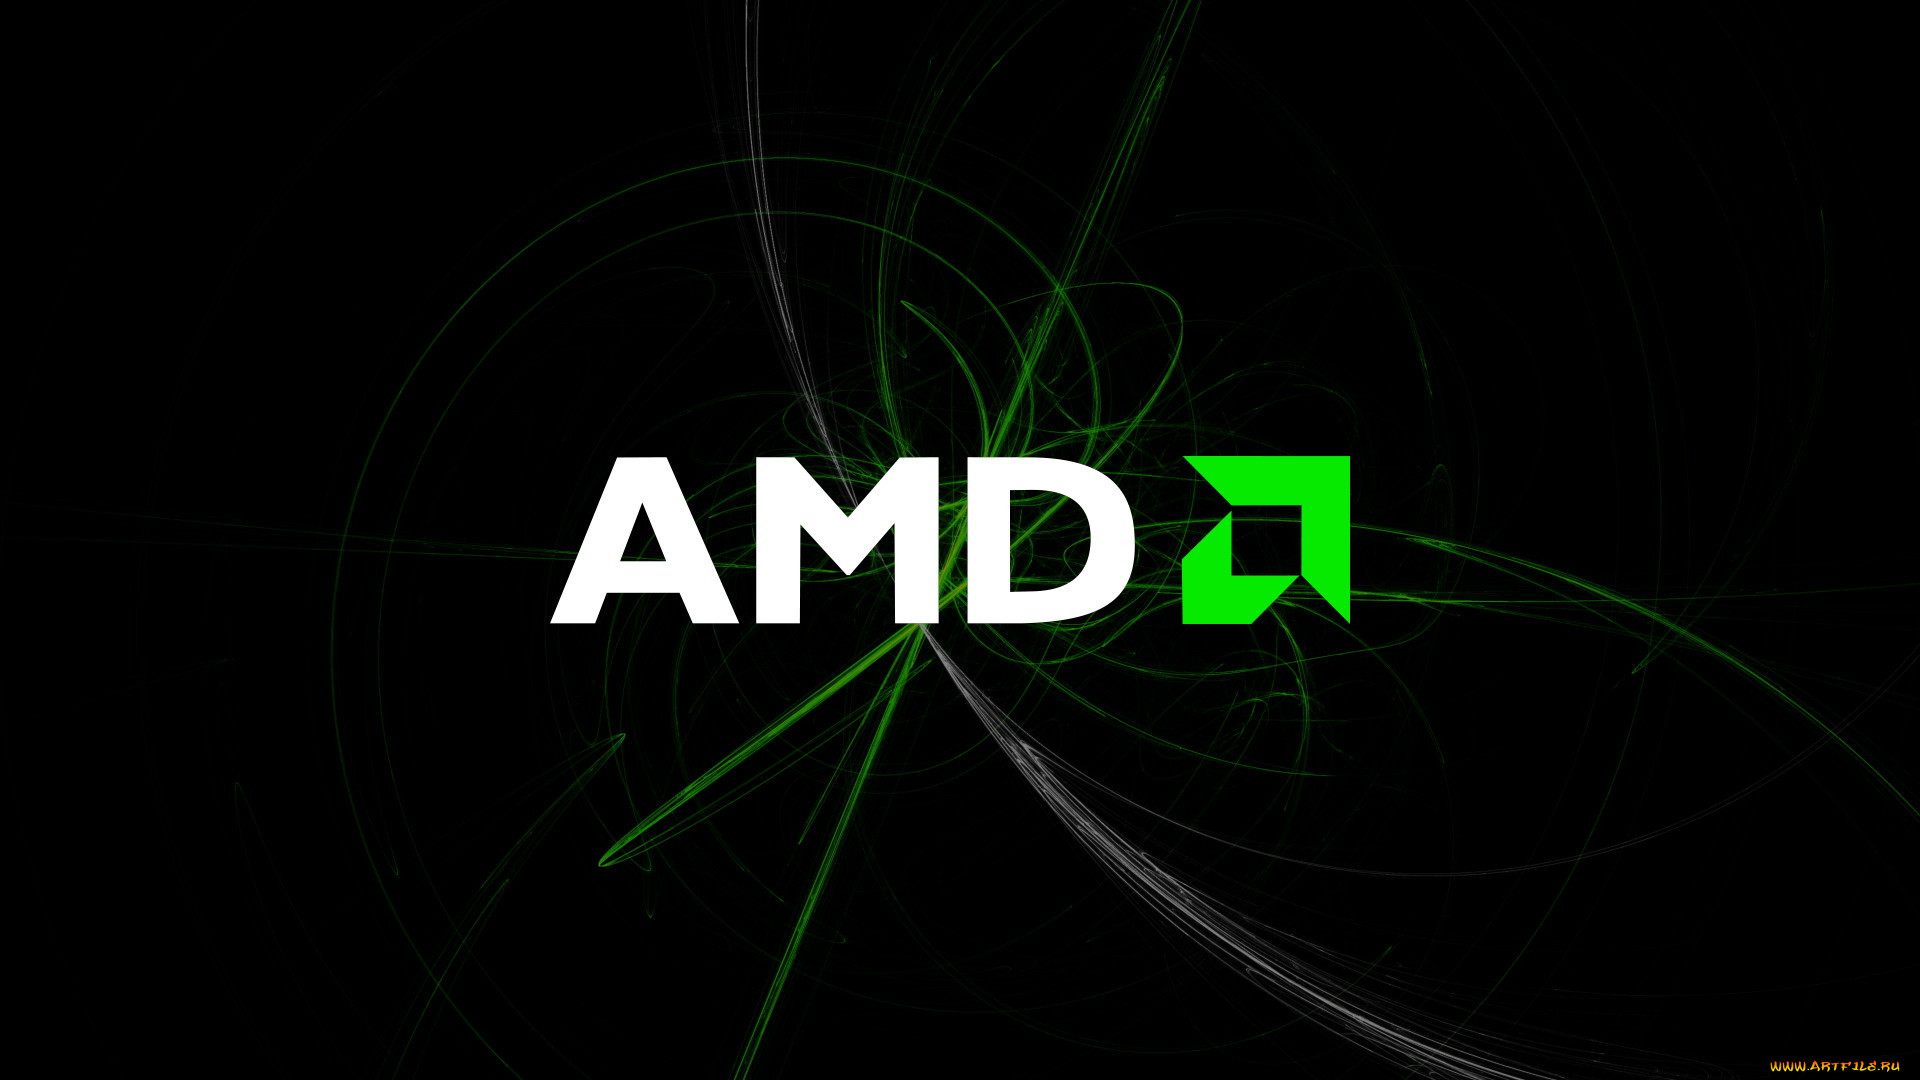 Amd service. AMD. AMD обои. Обои на рабочий стол AMD Radeon. AMD фон для рабочего стола.